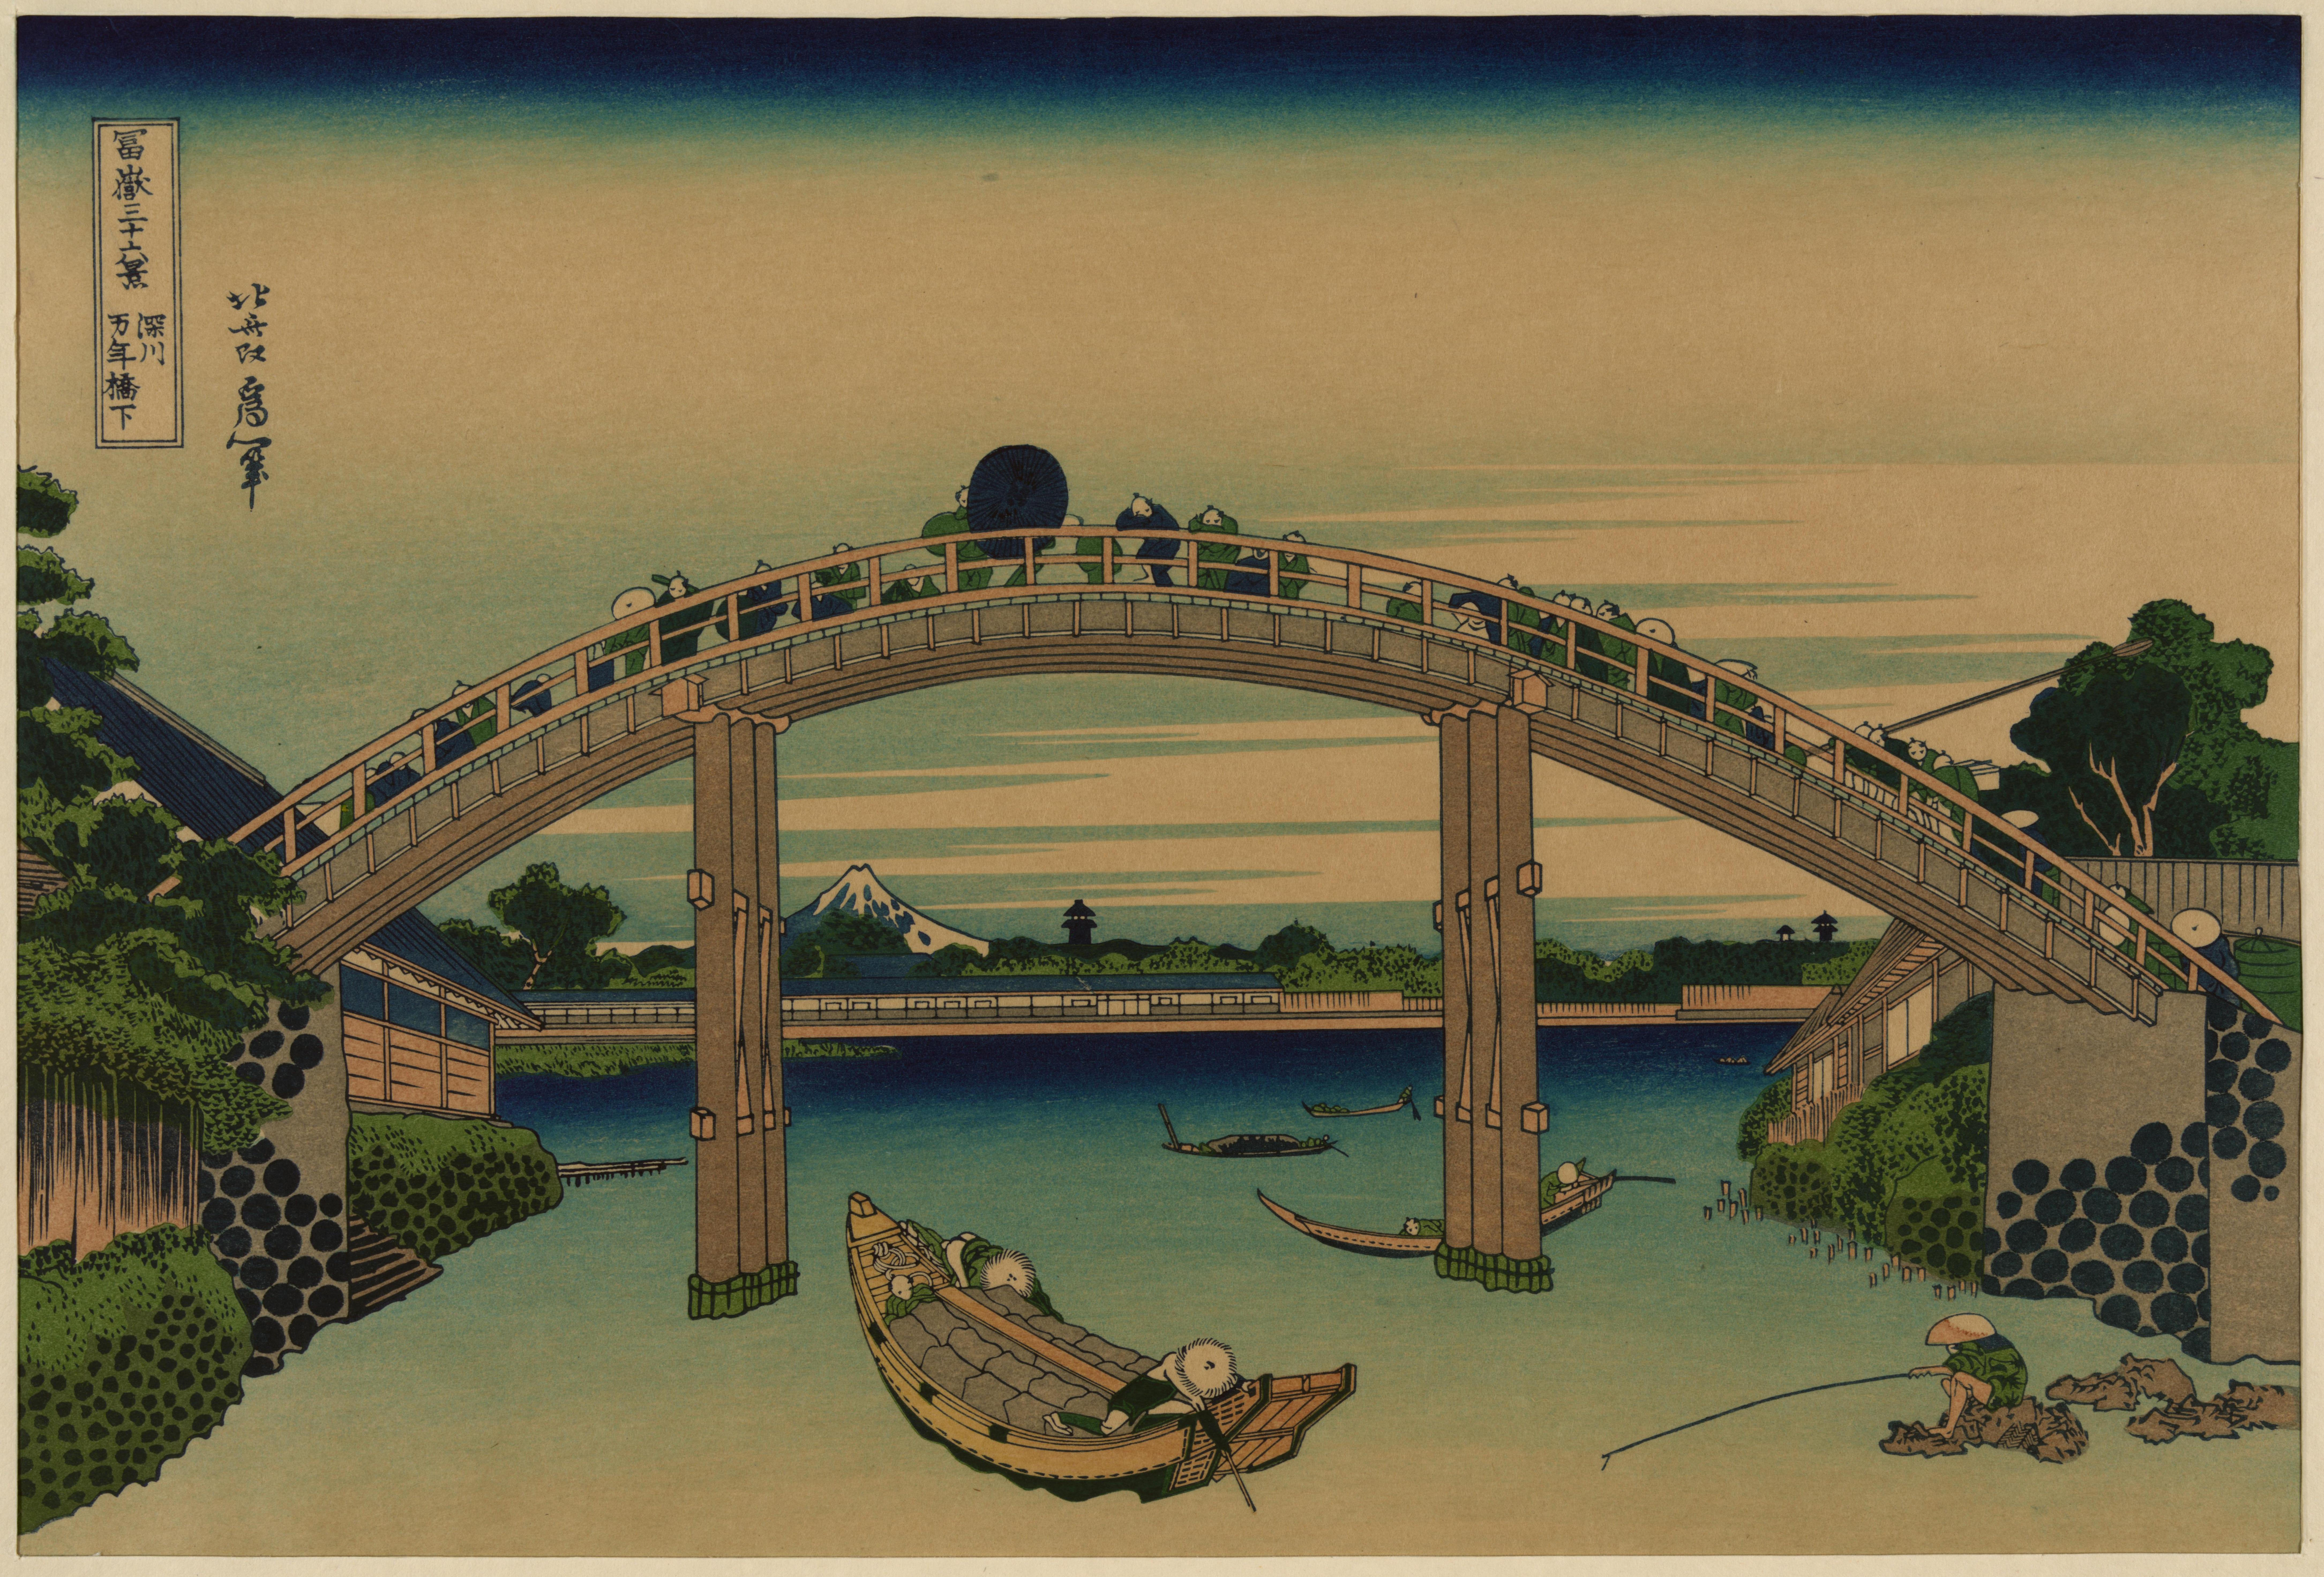 Katsushika Hokusai. Under the Mannen Bridge at Fukagawa, from the series Thirty-six Views of Mount Fuji